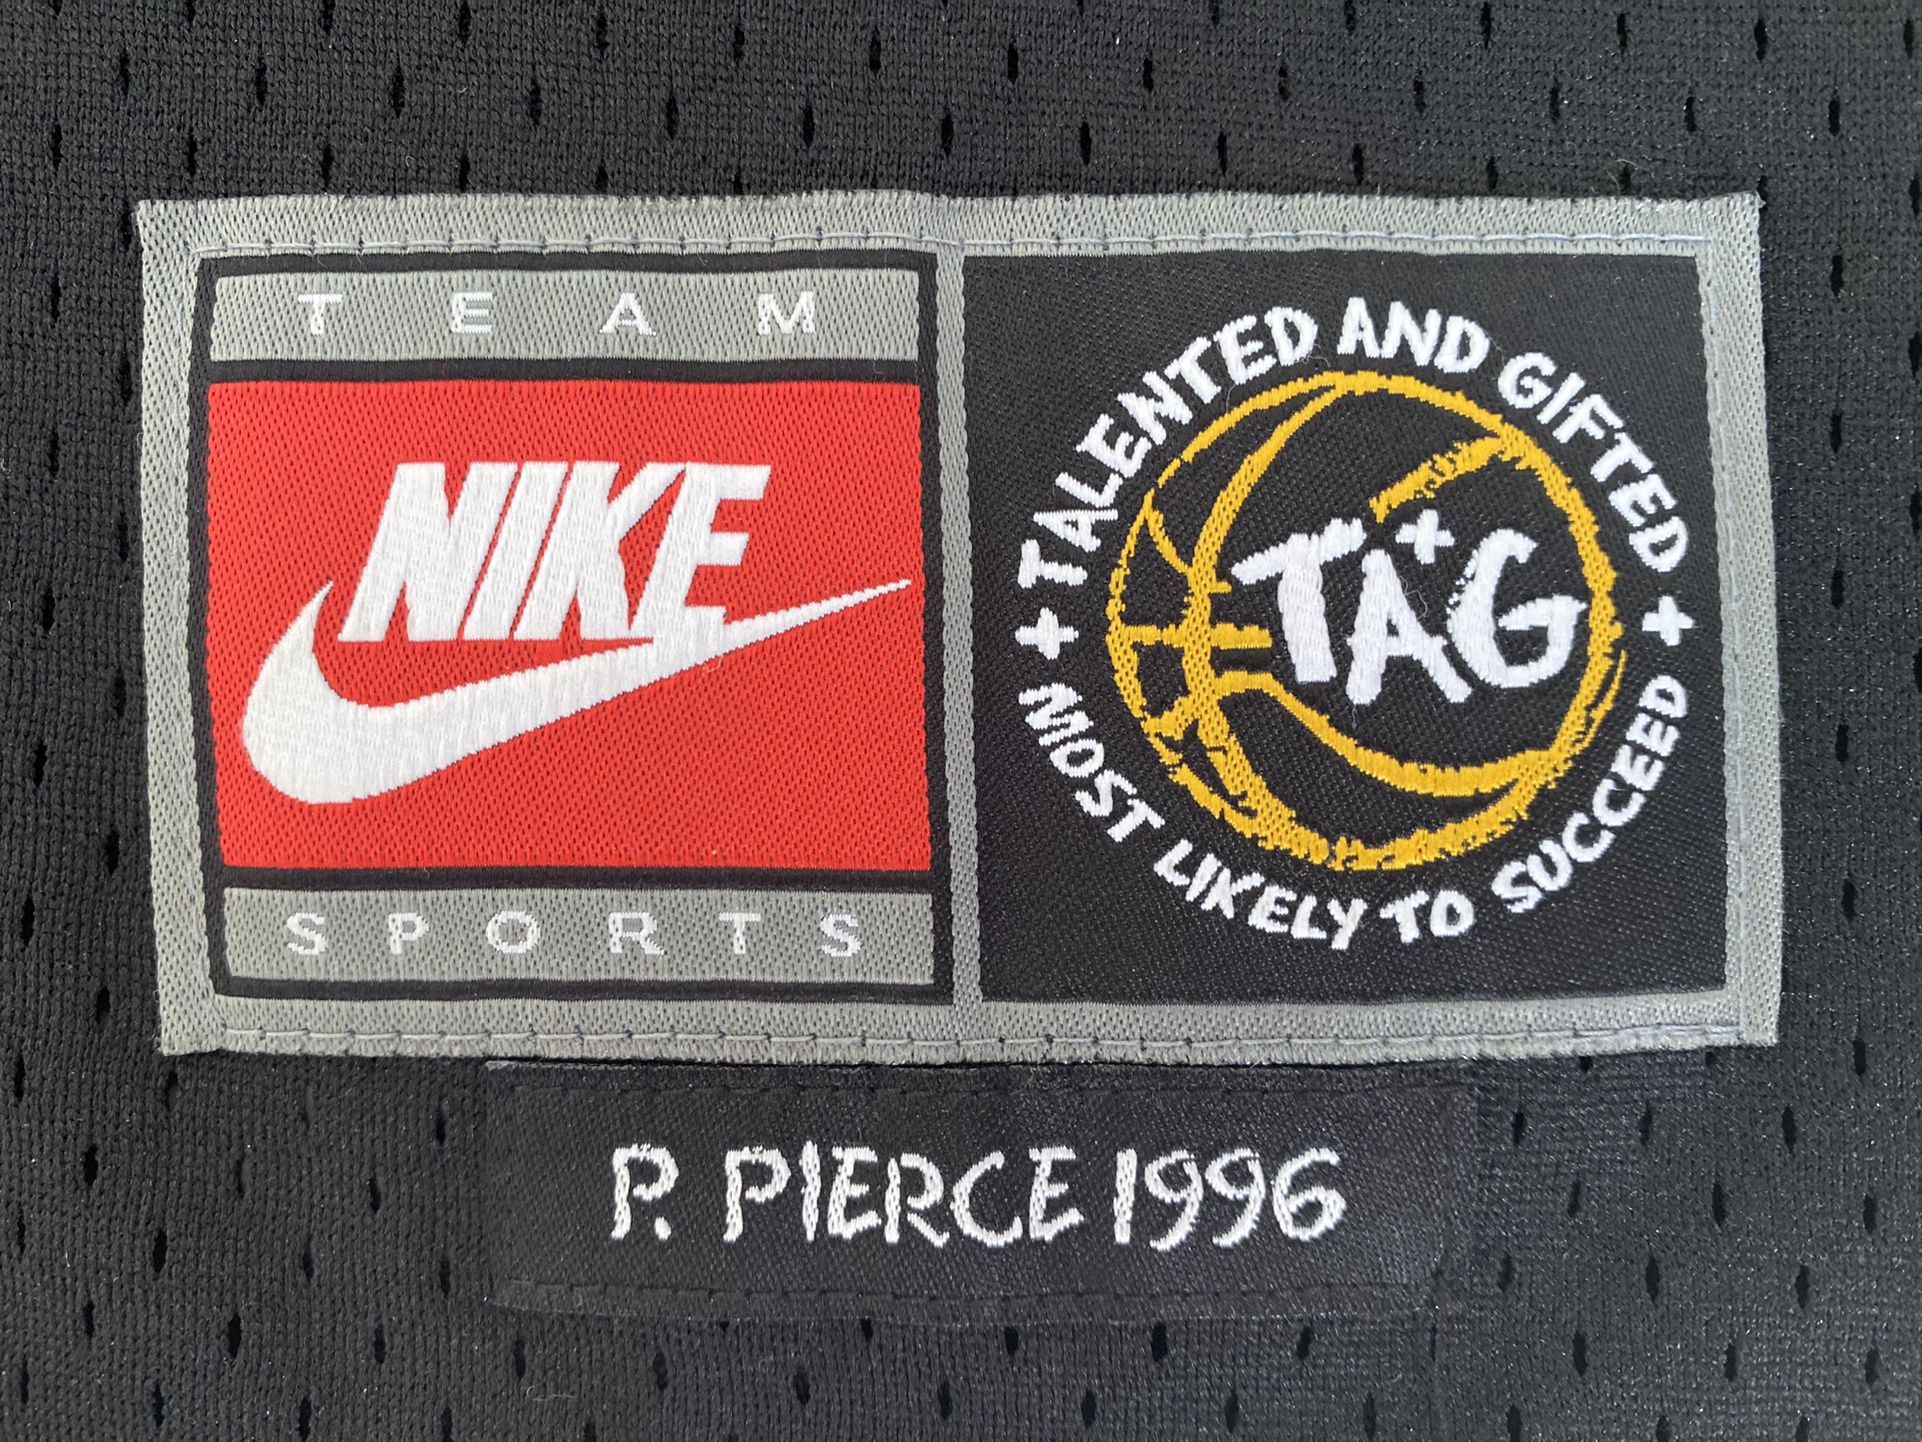 Paul Pierce “Celtics” #34 1996 Inglewood High School Nike TAG Basketball  Jersey 2XL $90 (((SOLD)))